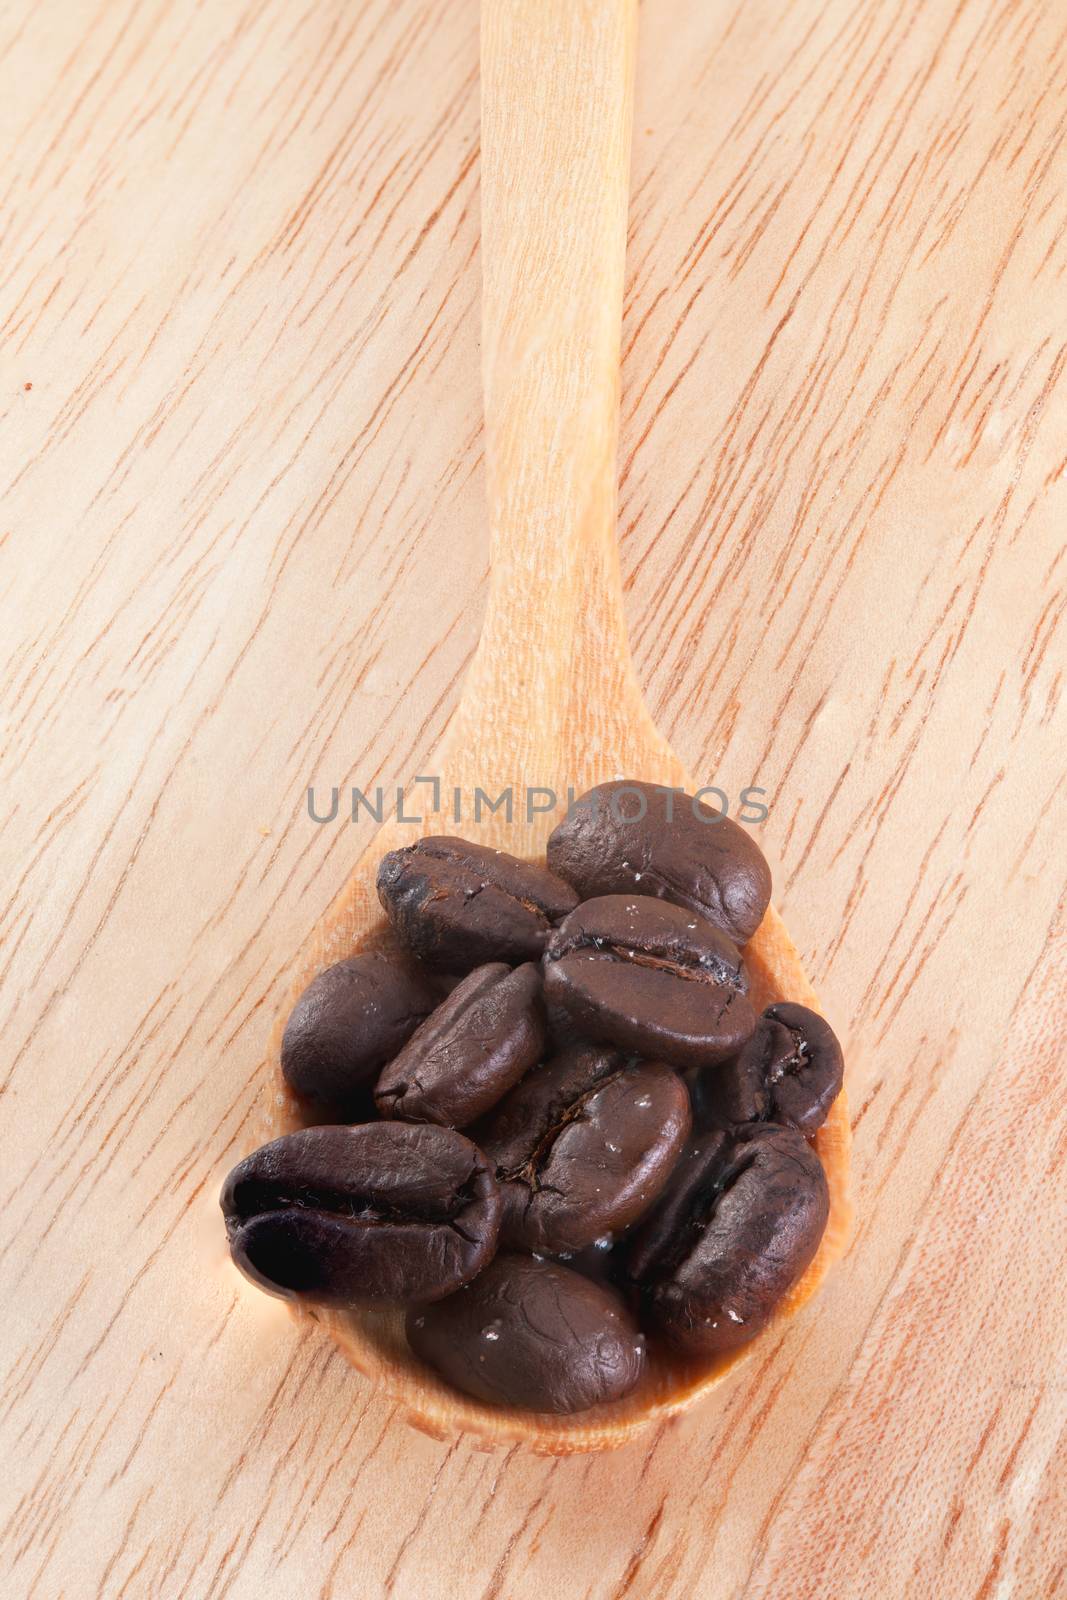 Fresh coffee beans arrangement put in wooden plates.